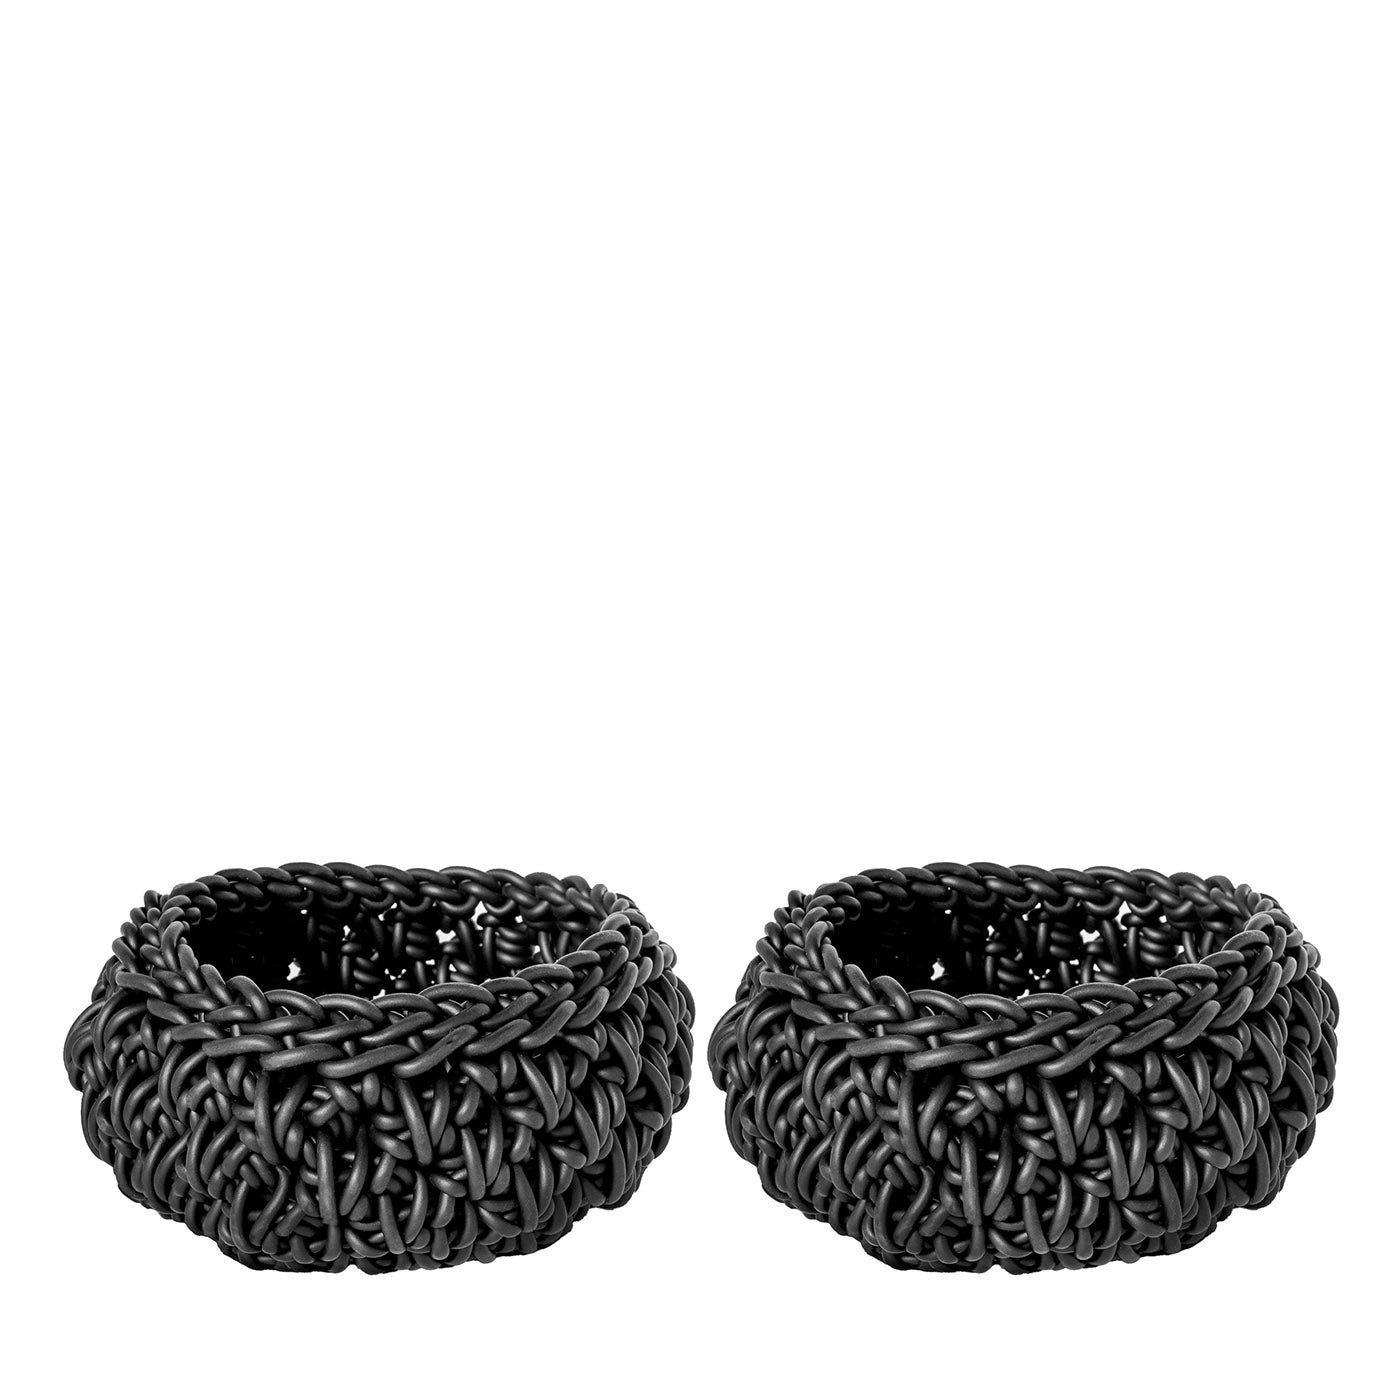 Set of 2 Ricami Black Baskets #3 by Rosanna Contadini - Main view